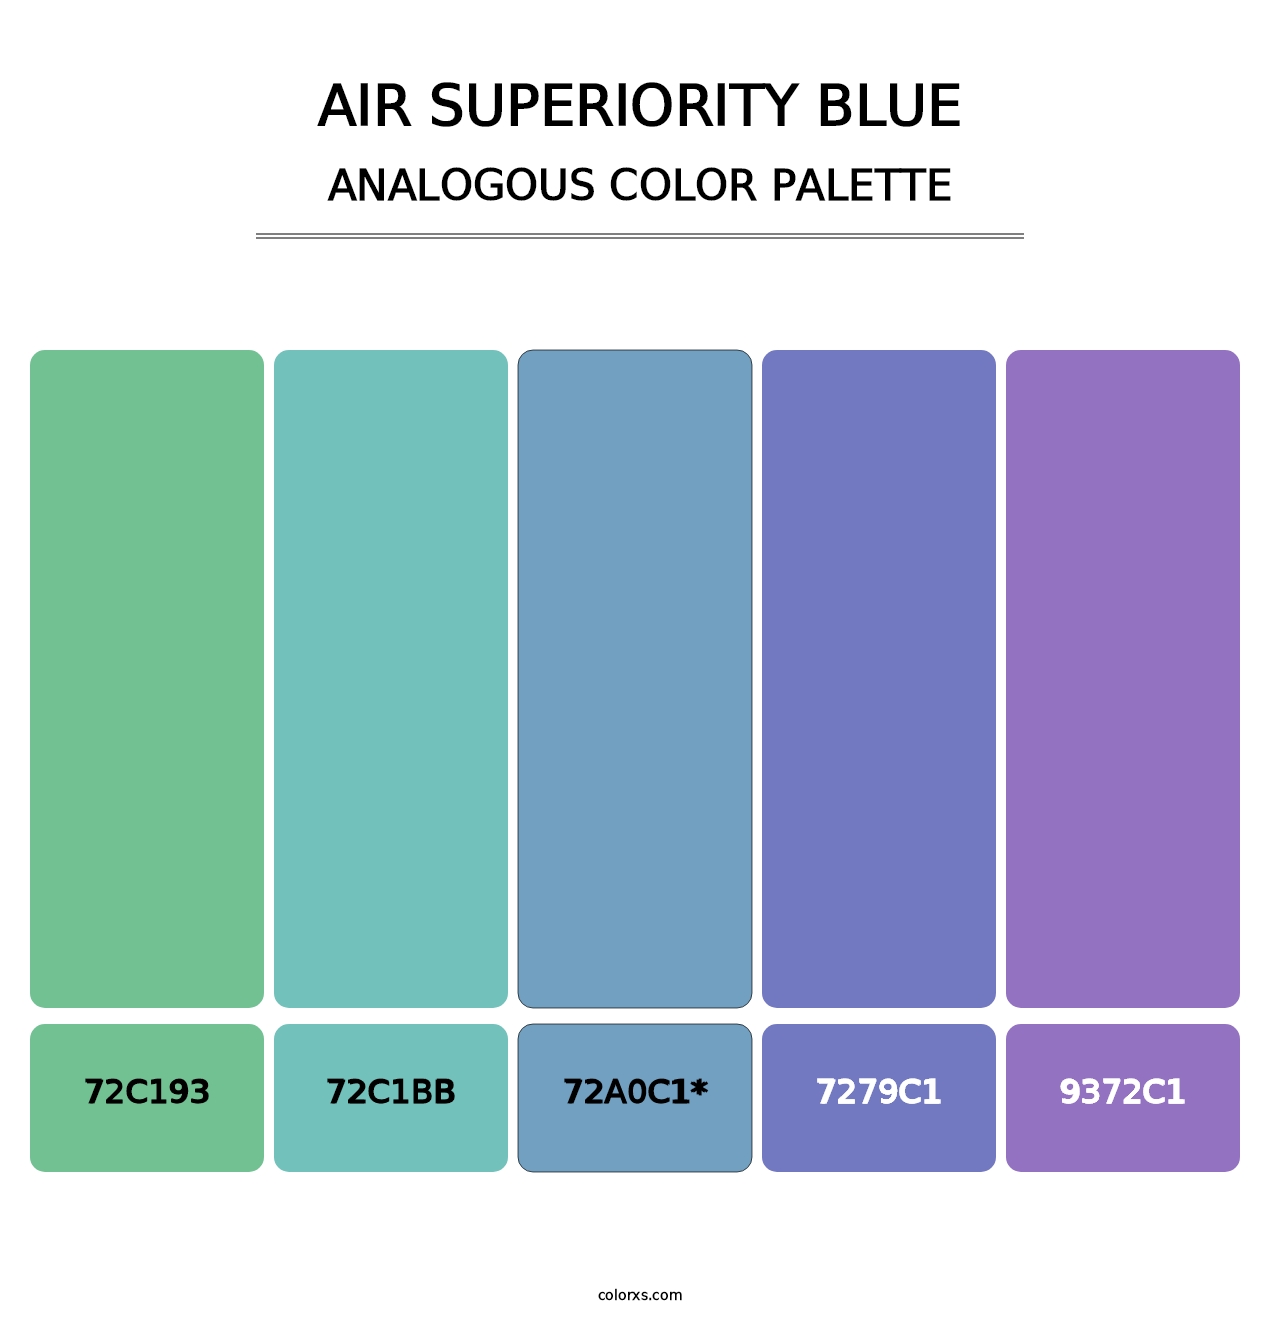 Air Superiority Blue - Analogous Color Palette